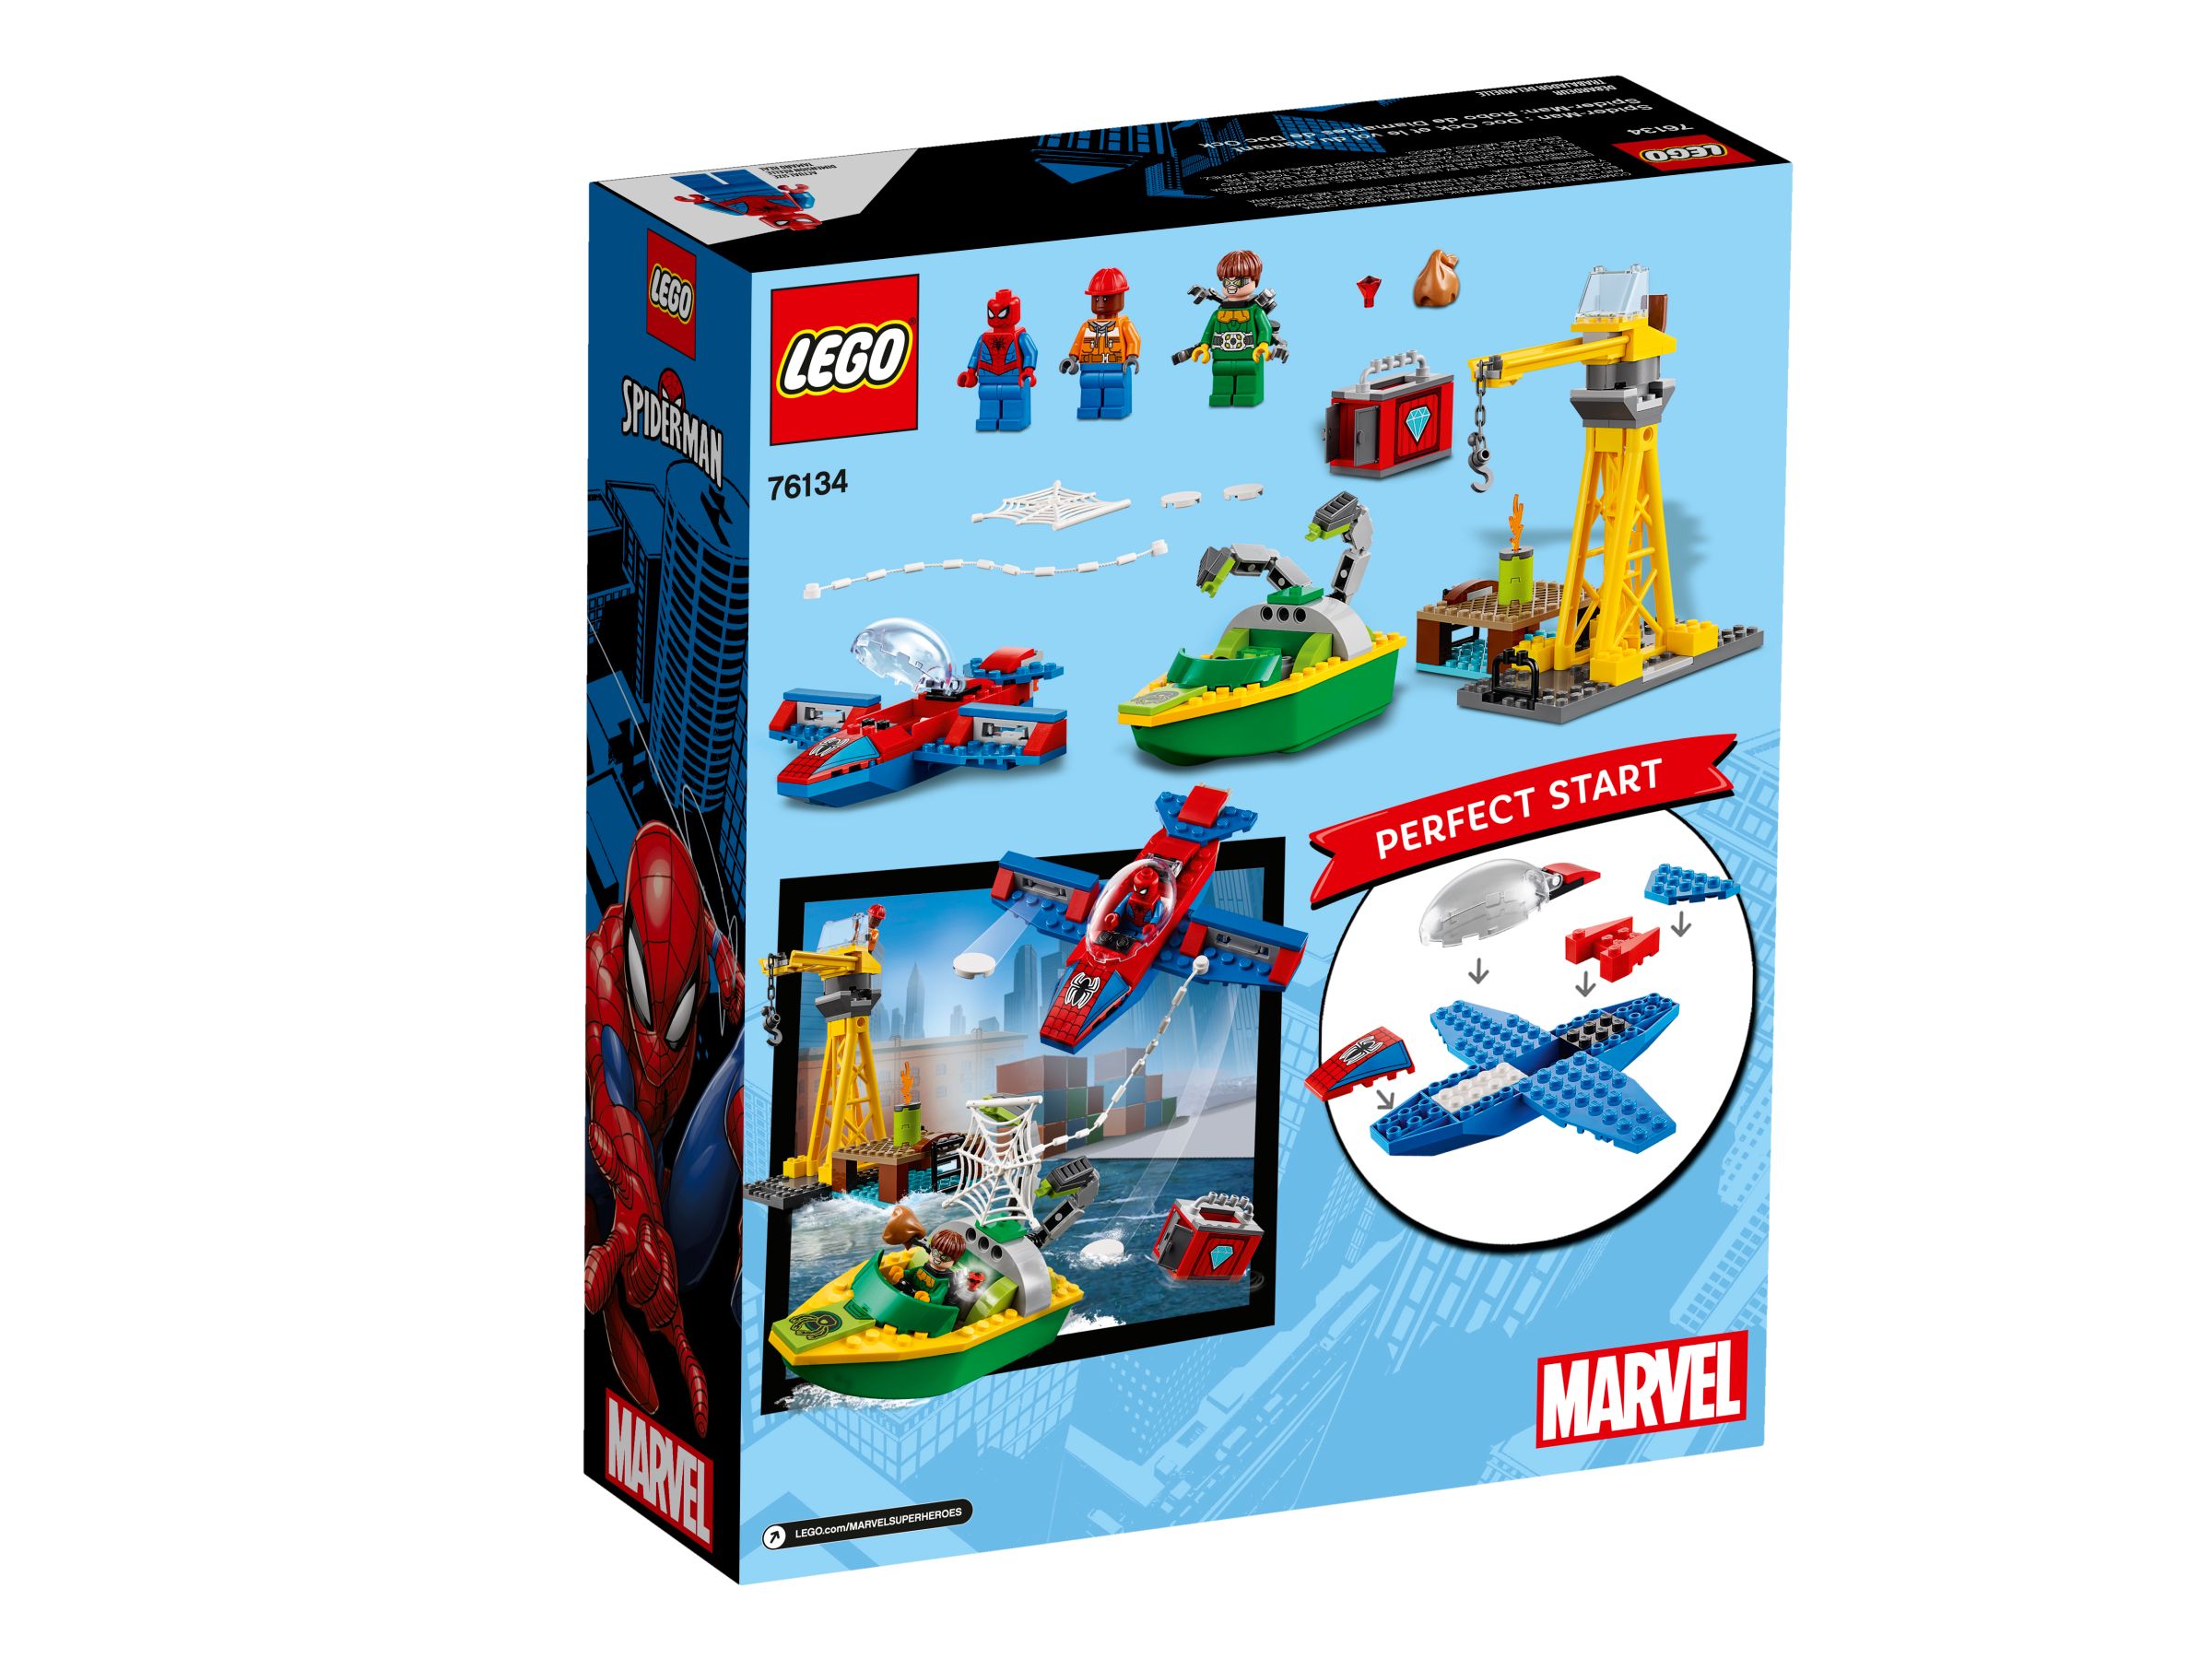 LEGO Super Heroes 76134 Spider-Man: Dock Ock Diamond LEGO_76134_alt4.jpg